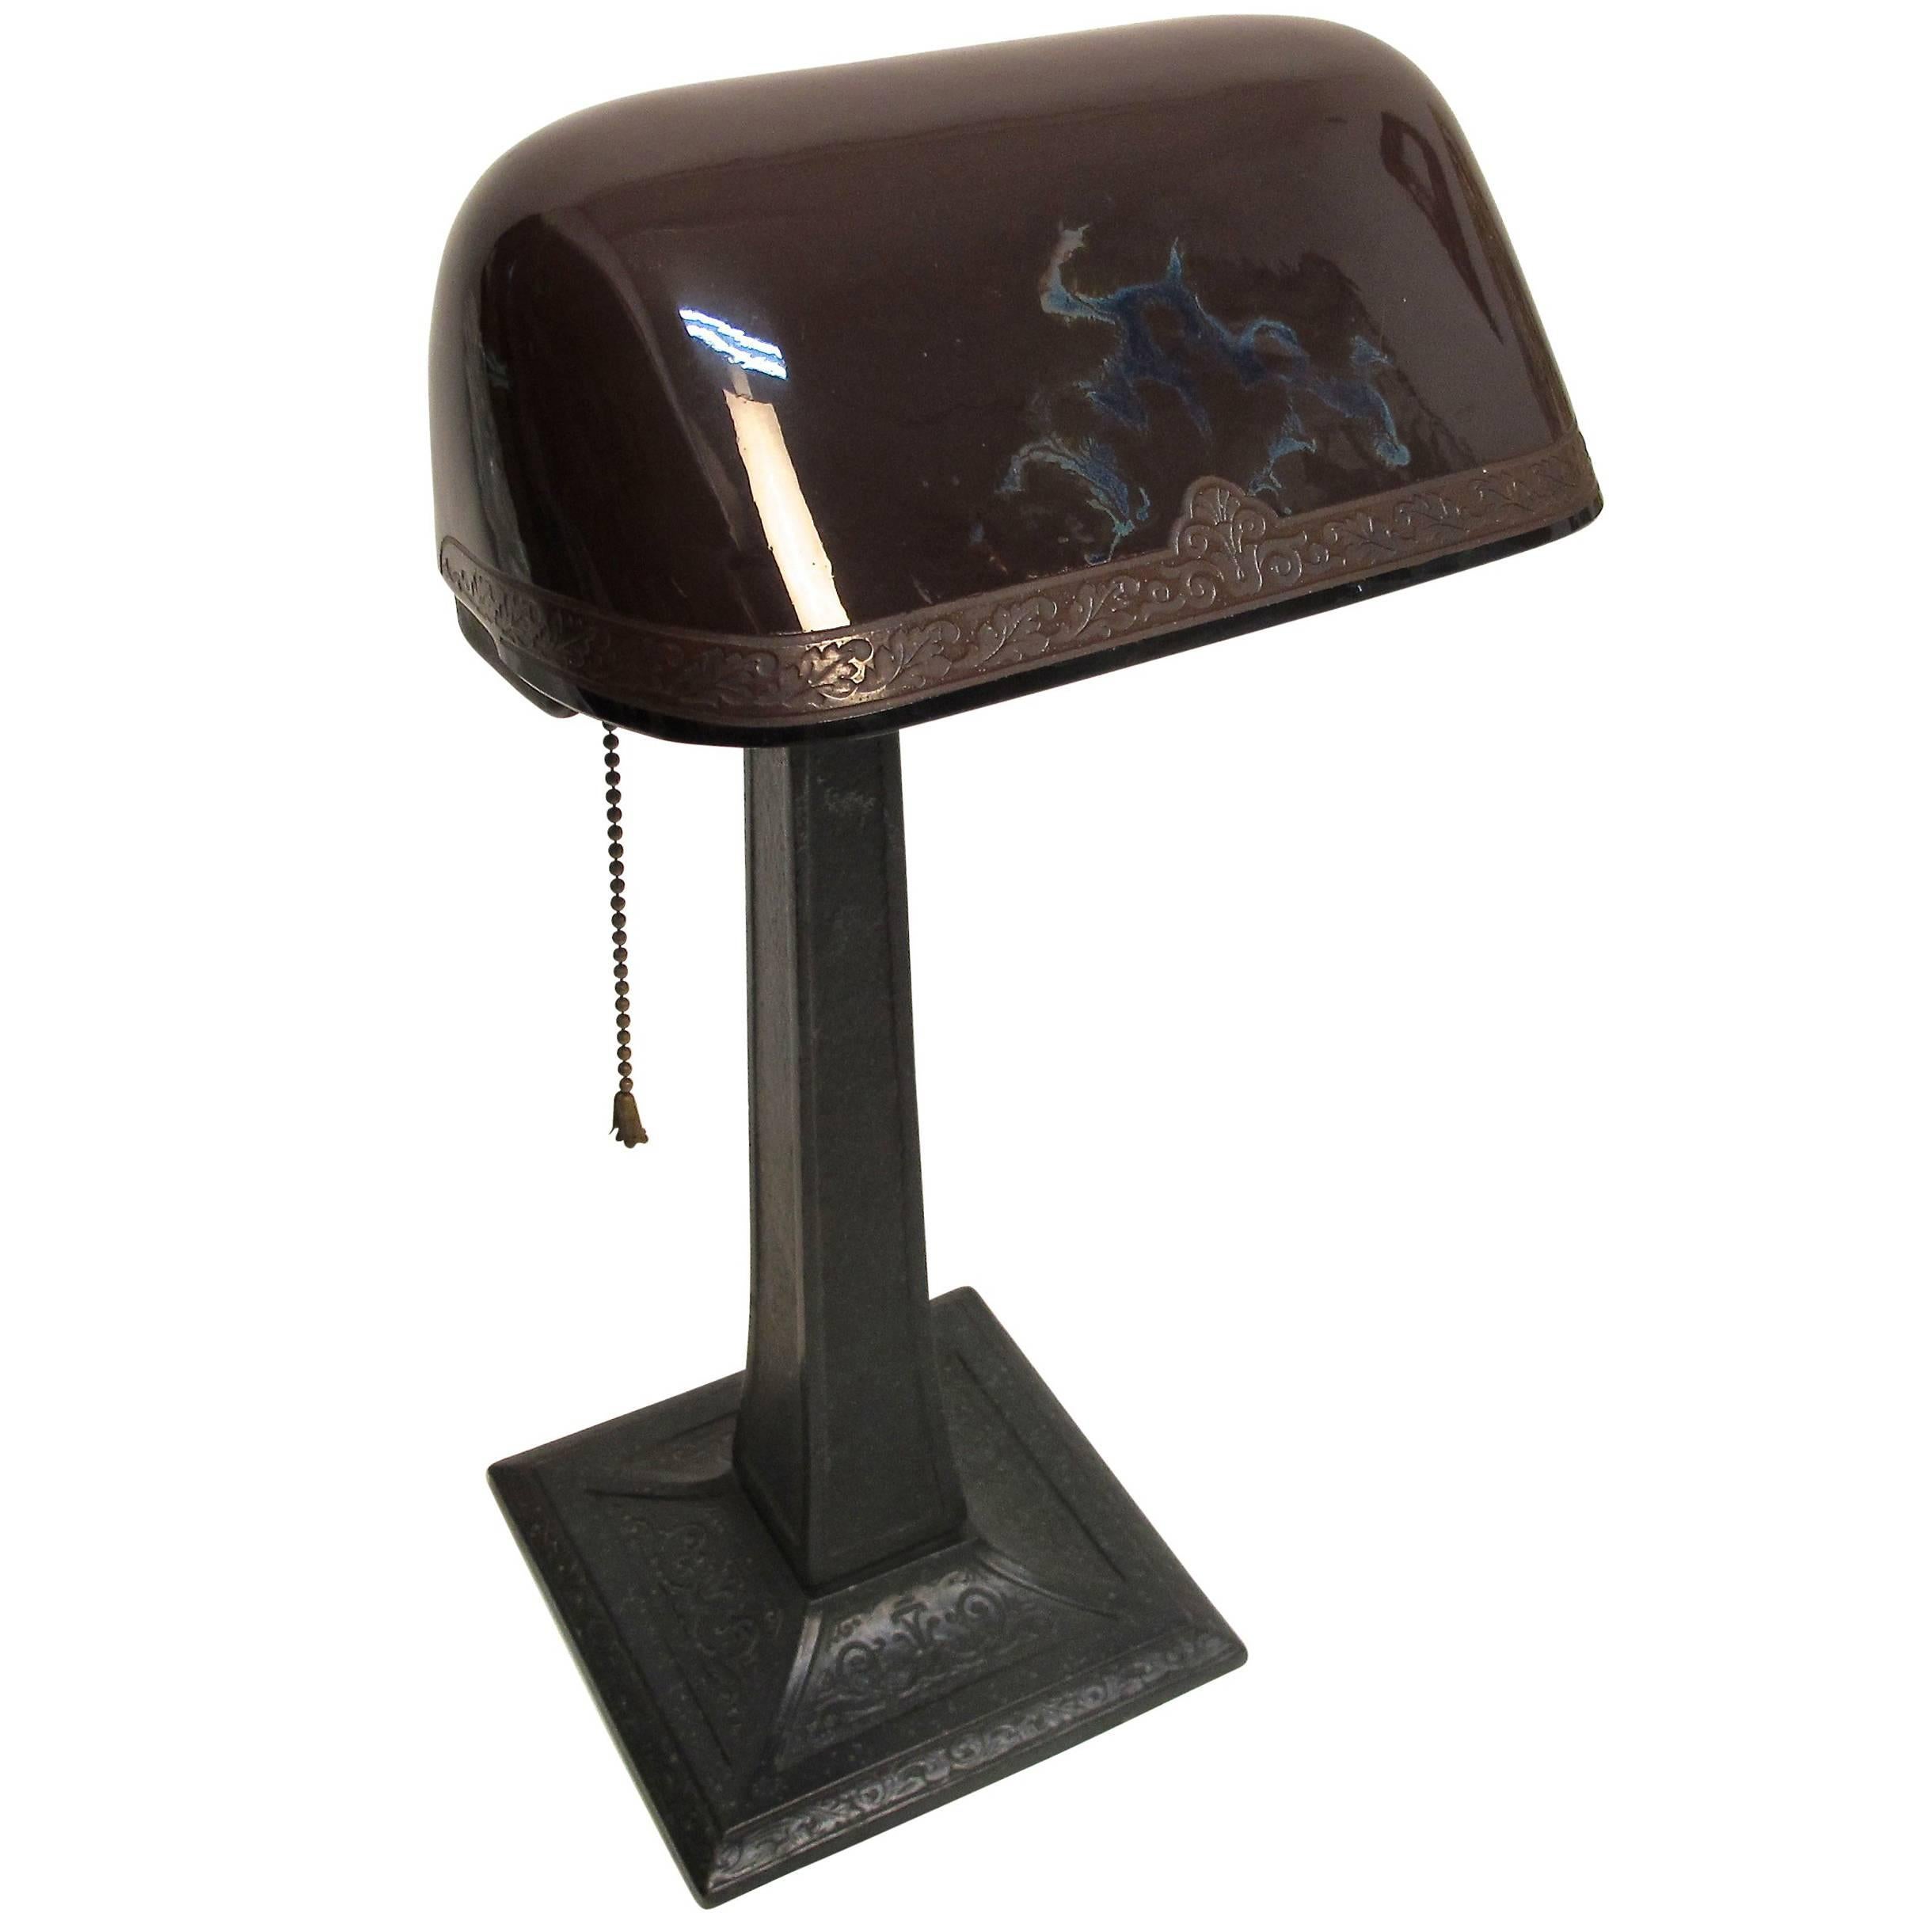 Emeralite Desk Lamp with Cased Glass Shade, American, circa 1915